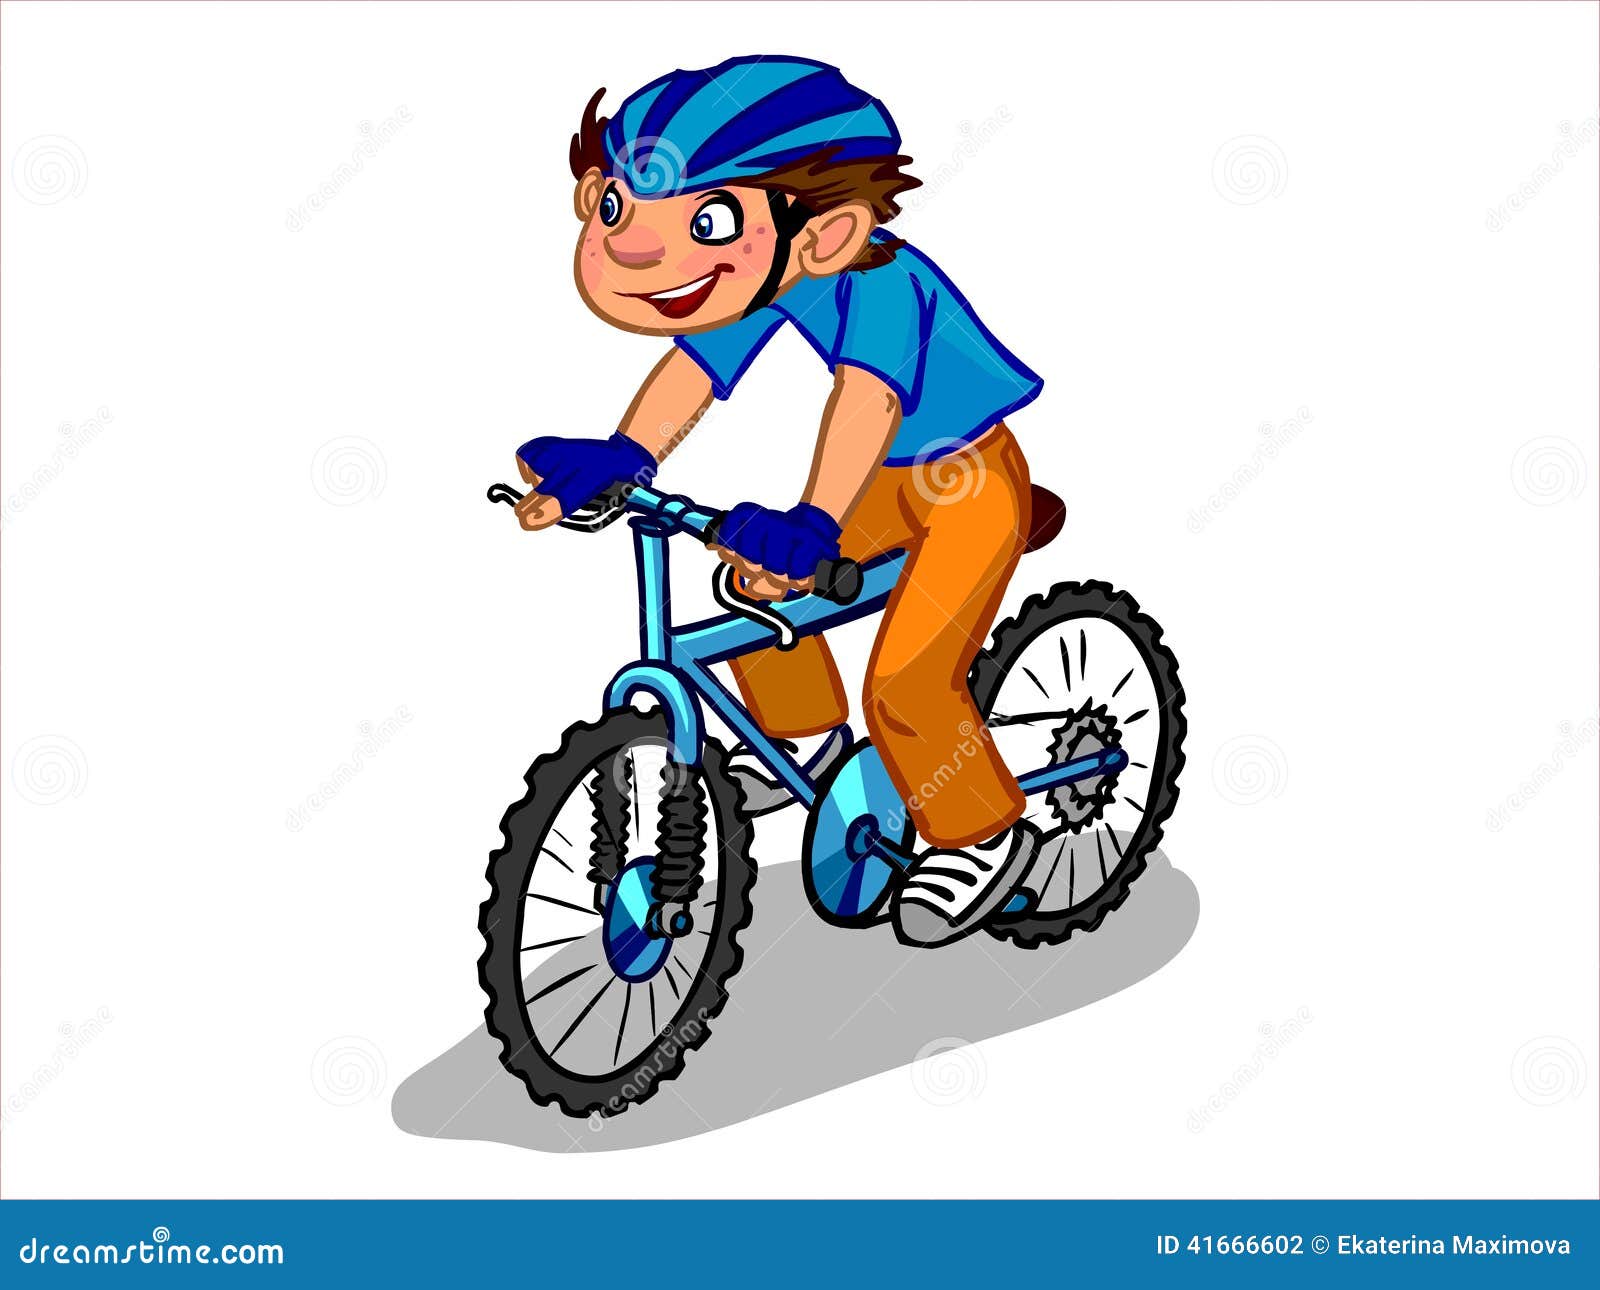 blue bike clipart - photo #34